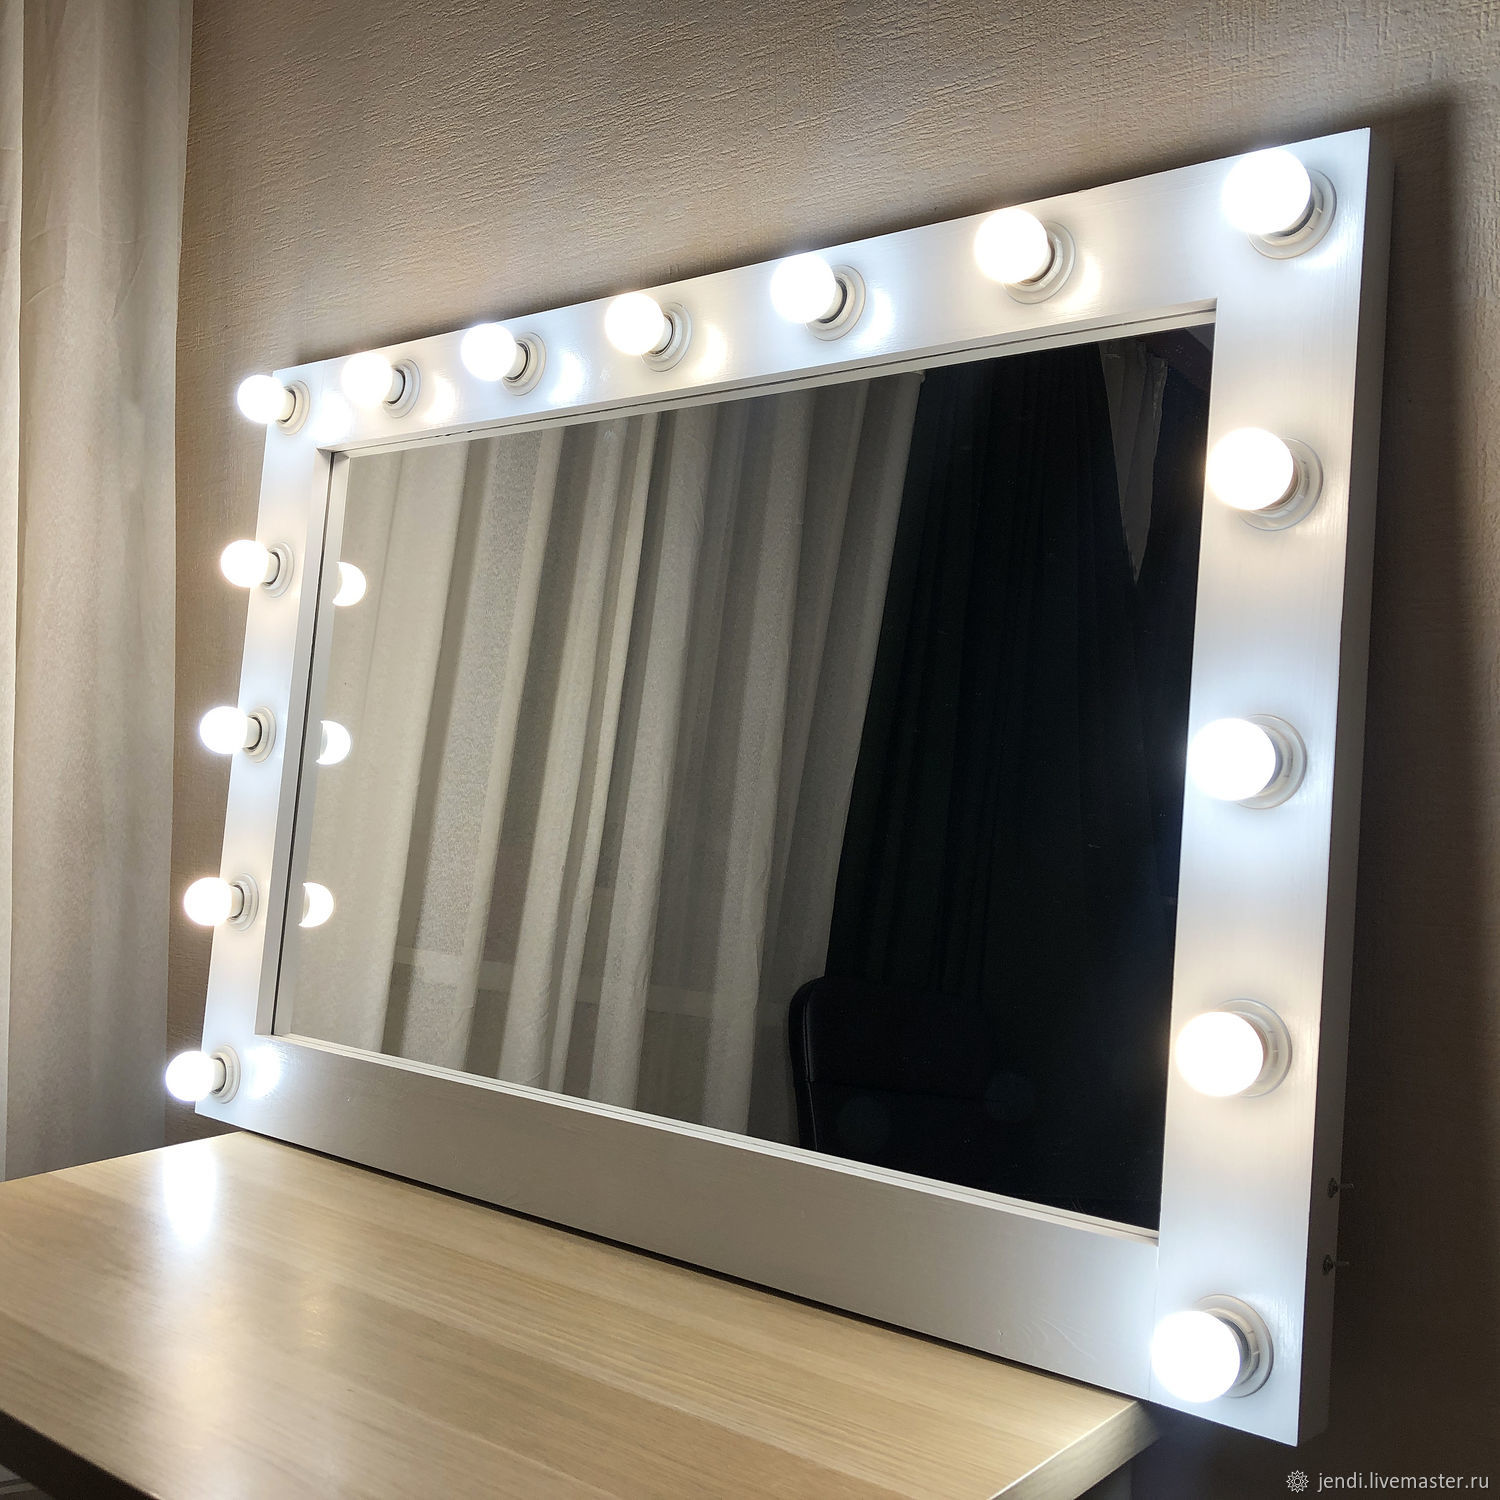 Гримерное зеркало GM Mirror, 50 см х 60 см, белый, 6 ламп